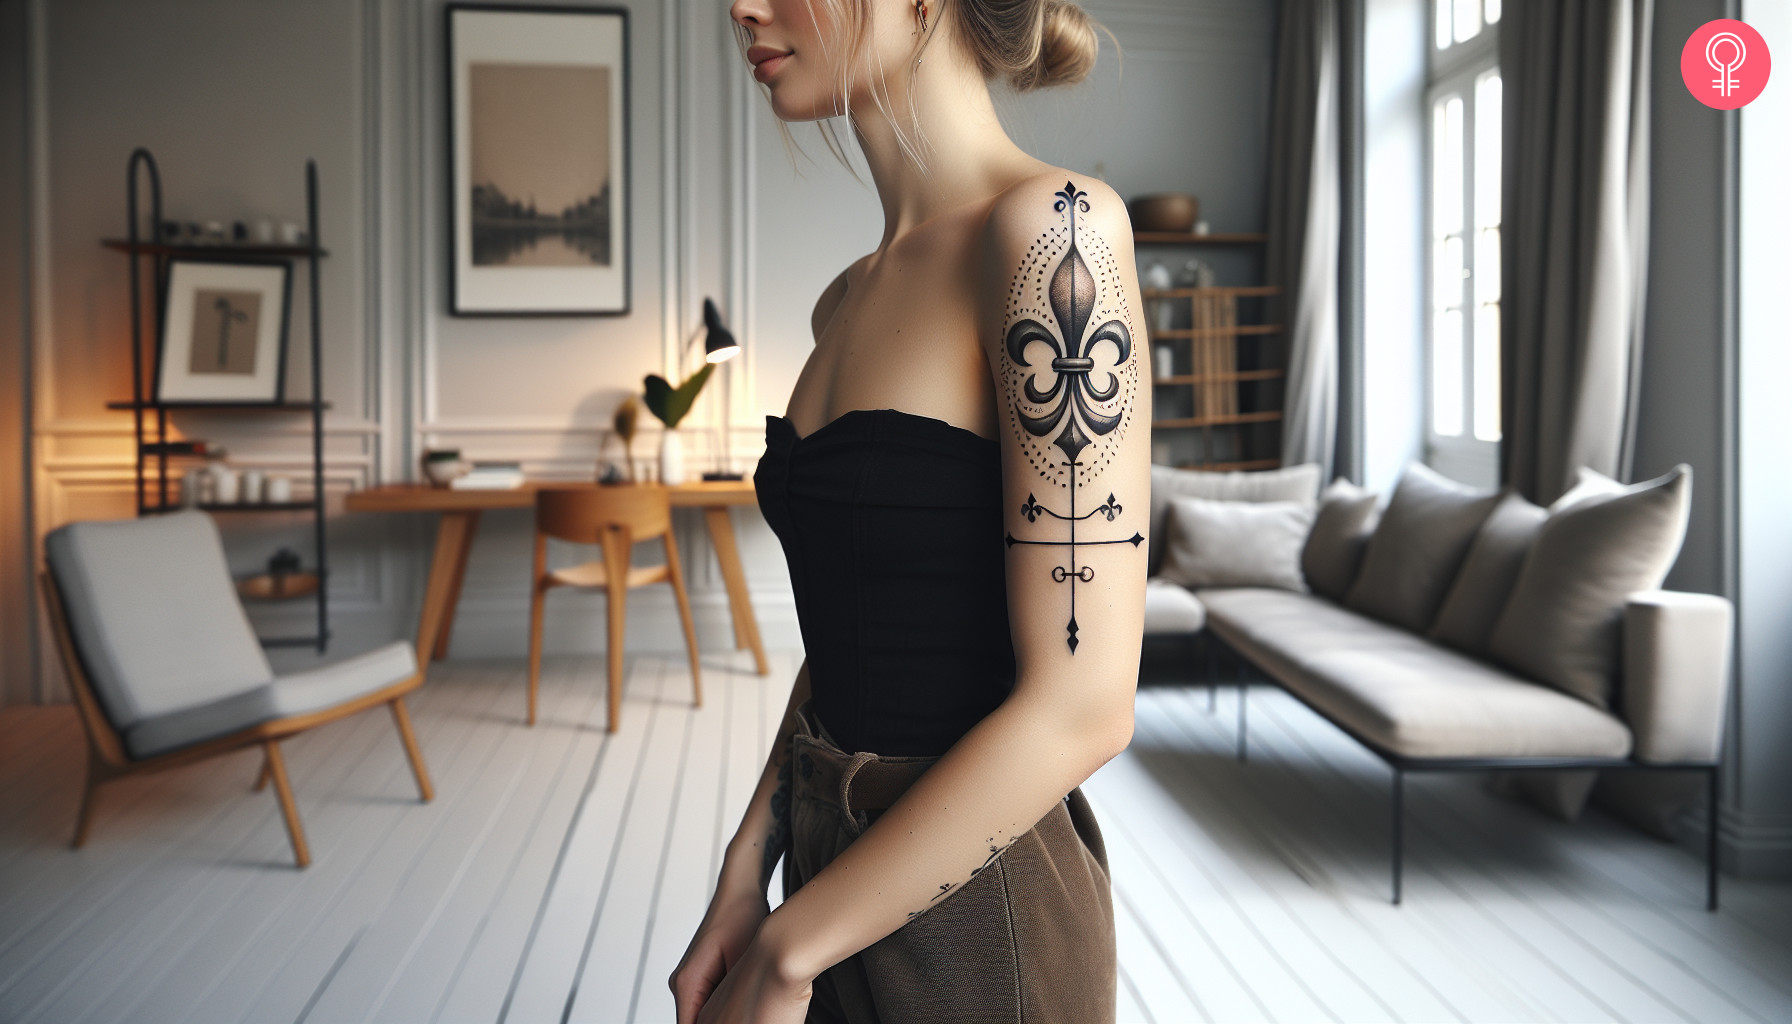 A fleur de lis cross tattoo on the arm